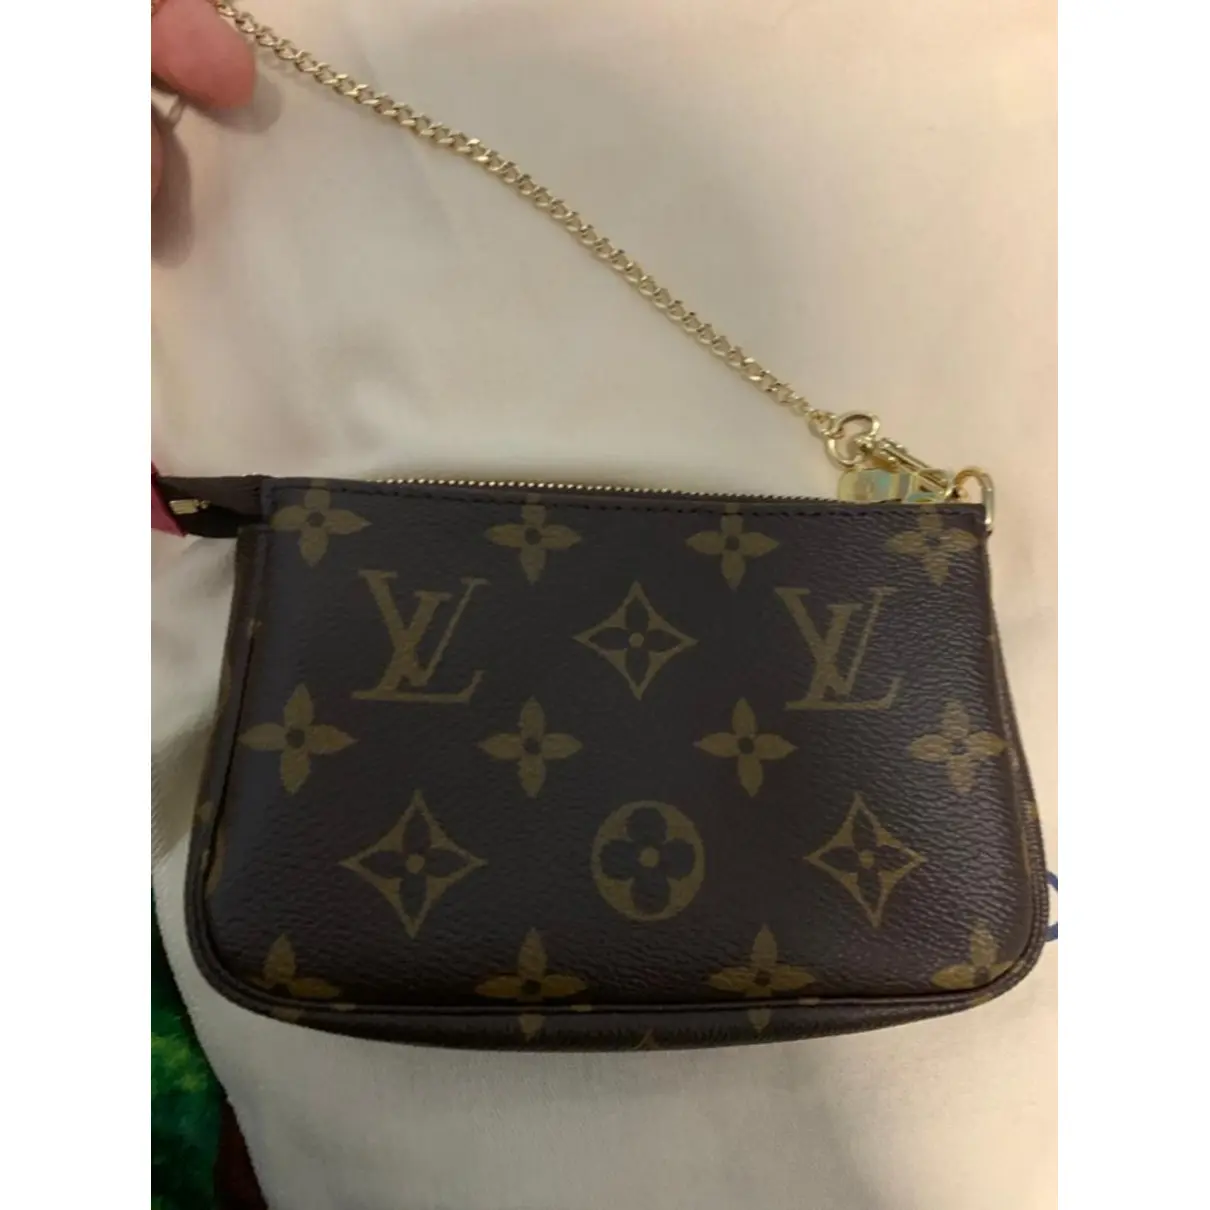 Buy Louis Vuitton Lexington cloth handbag online